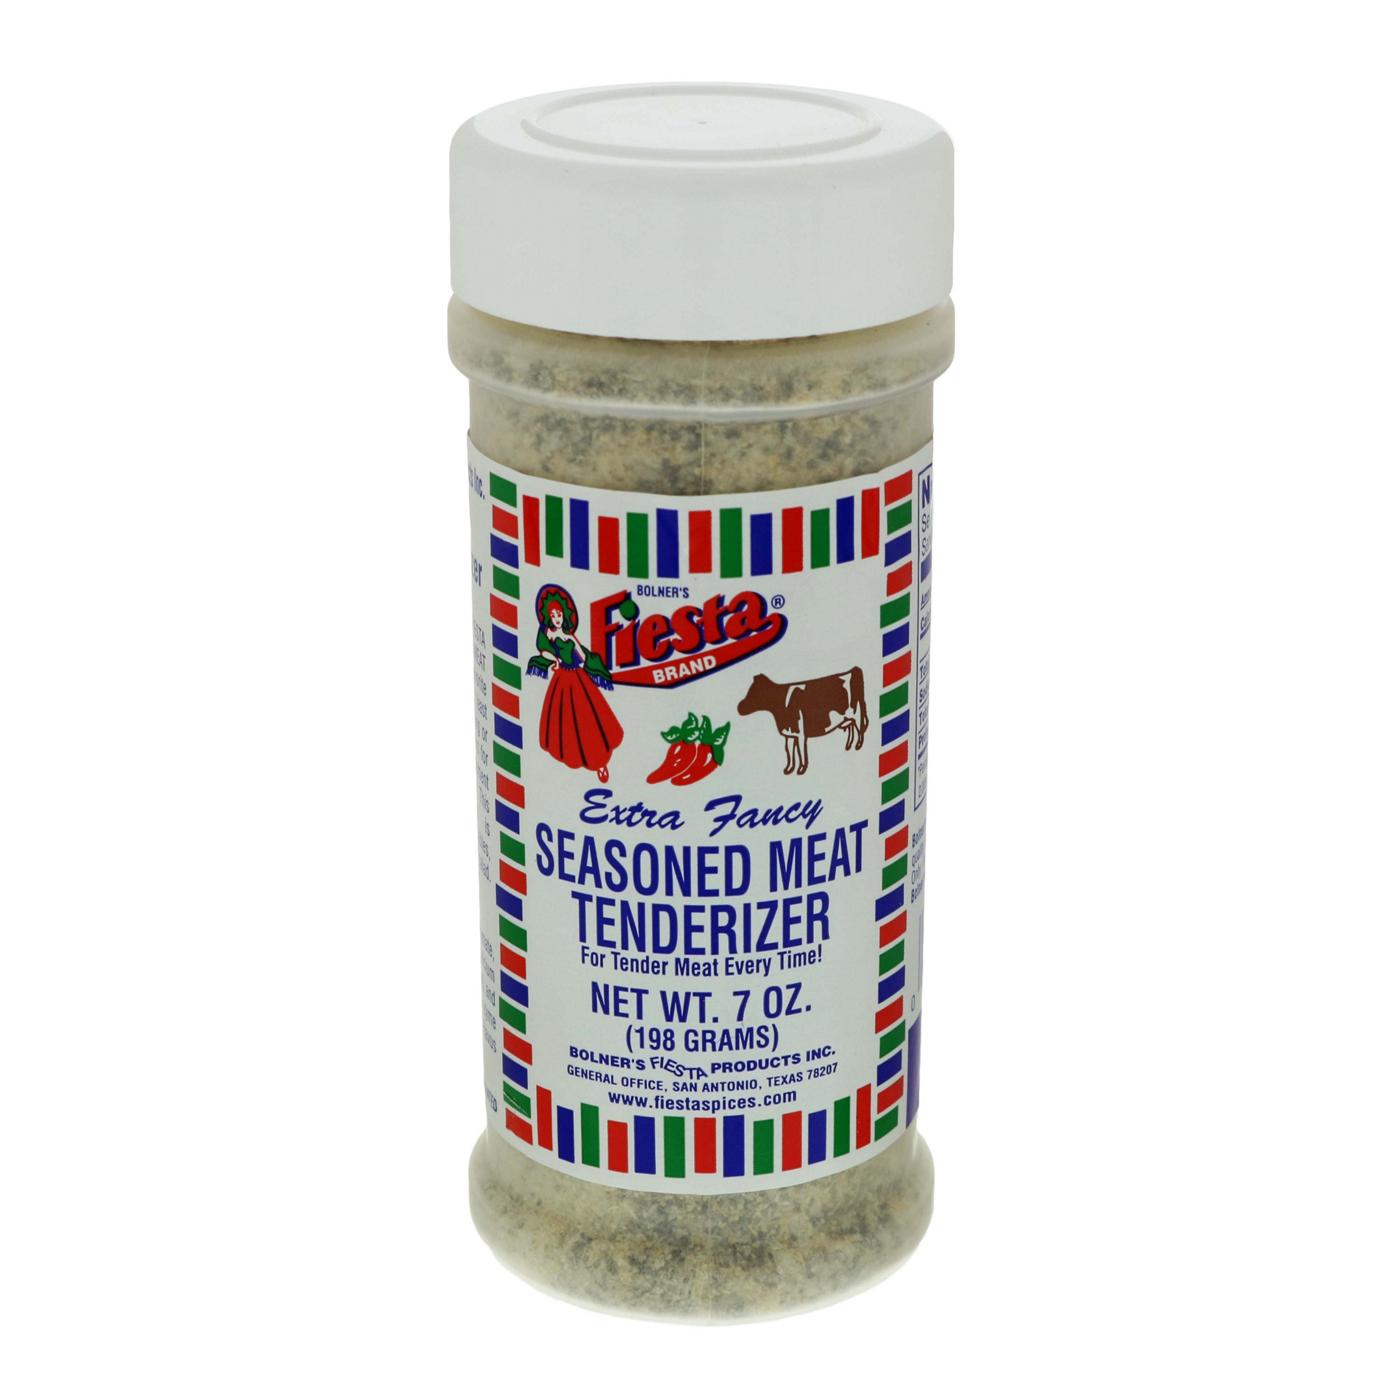 Bolner's Fiesta Seasoned Meat Tenderizer - Shop Herbs & Spices at